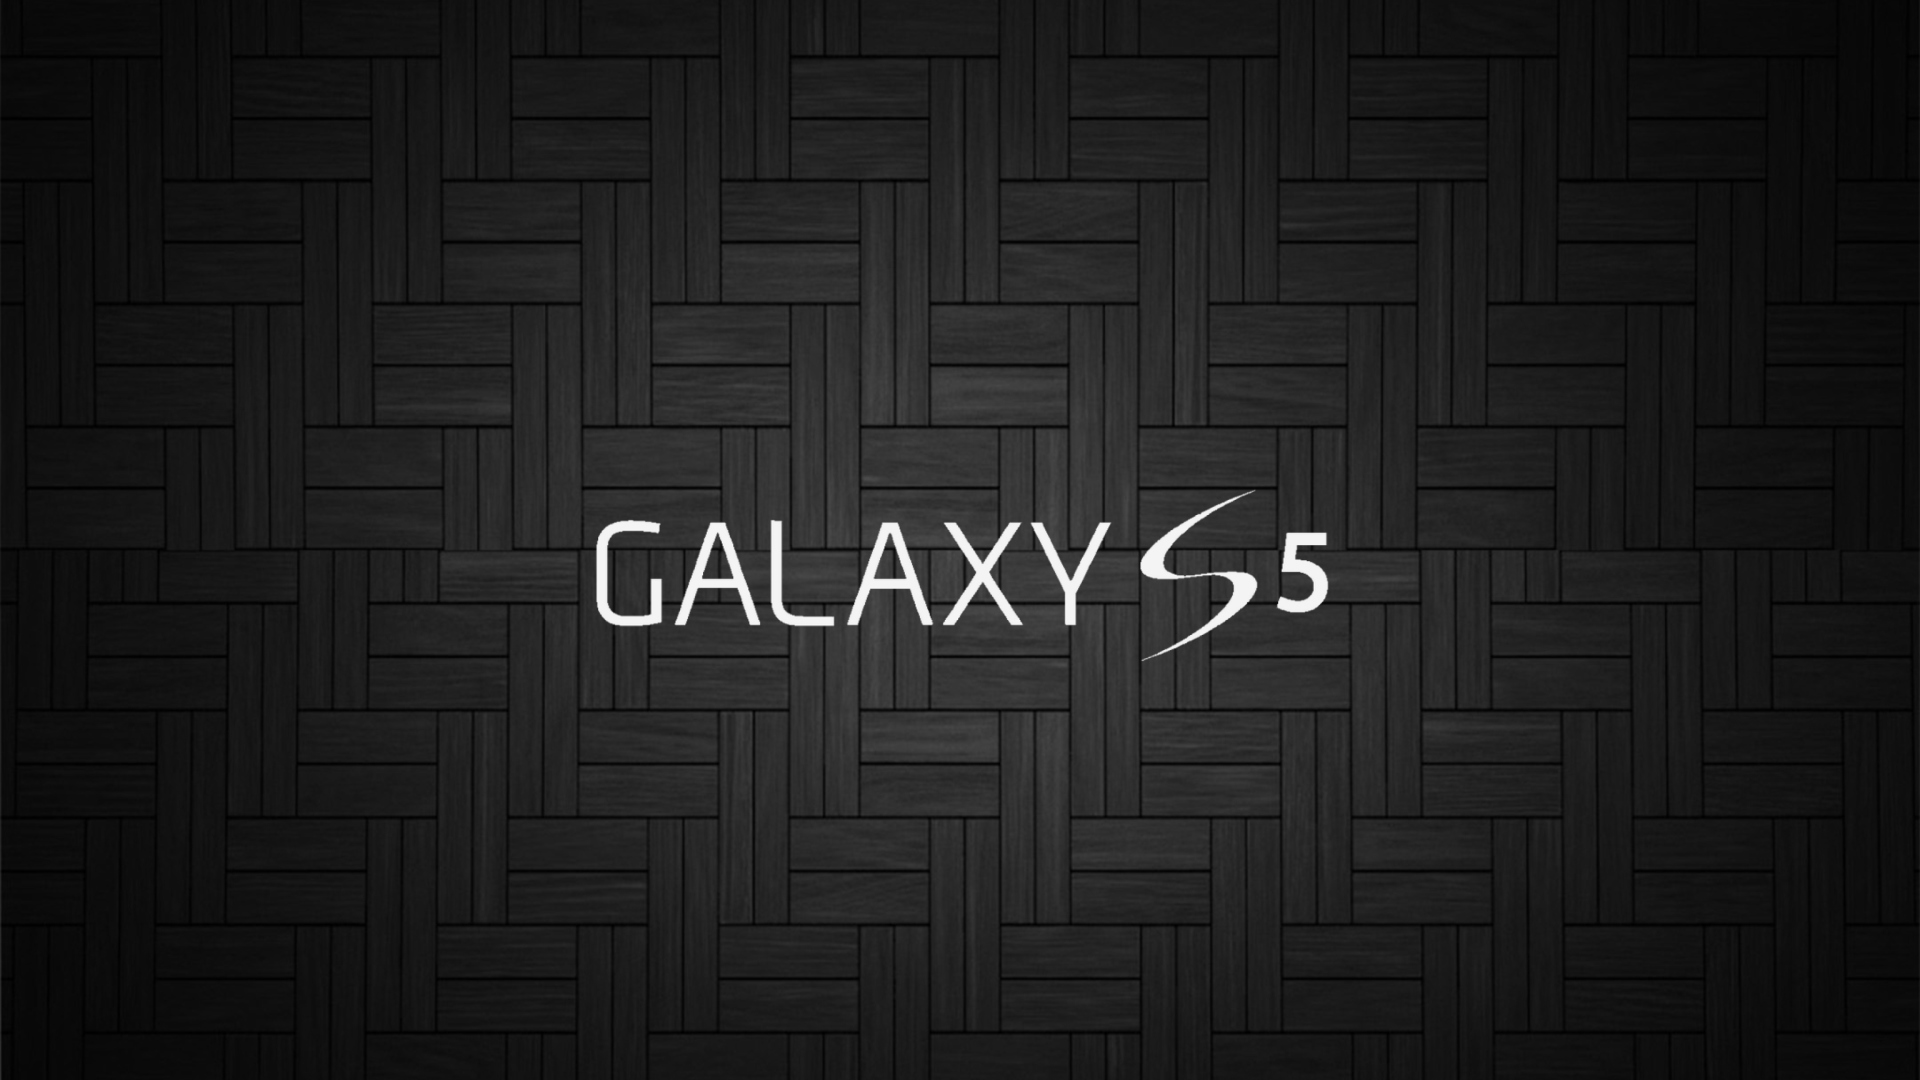 Galaxy S5 Wallpaper for Desktop 1920x1080 Full HD